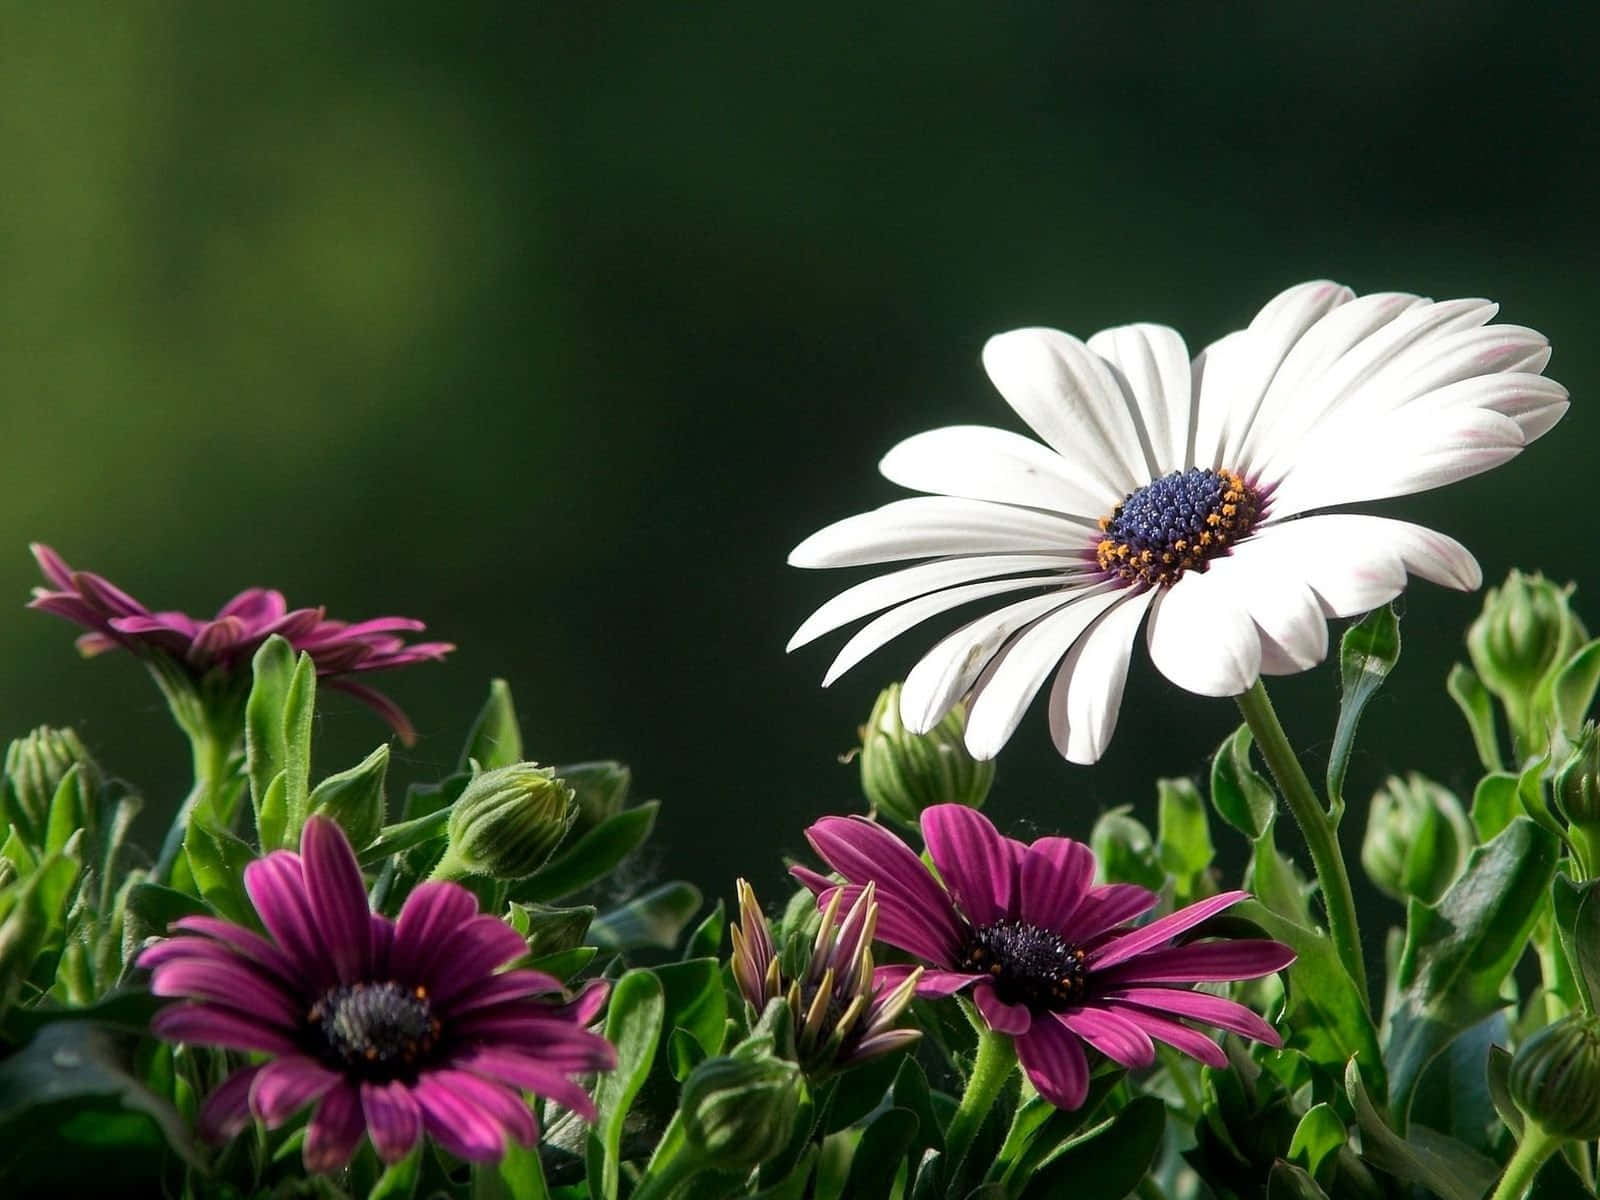 1K+ Nature Flower Pictures | Download Free Images on Unsplash